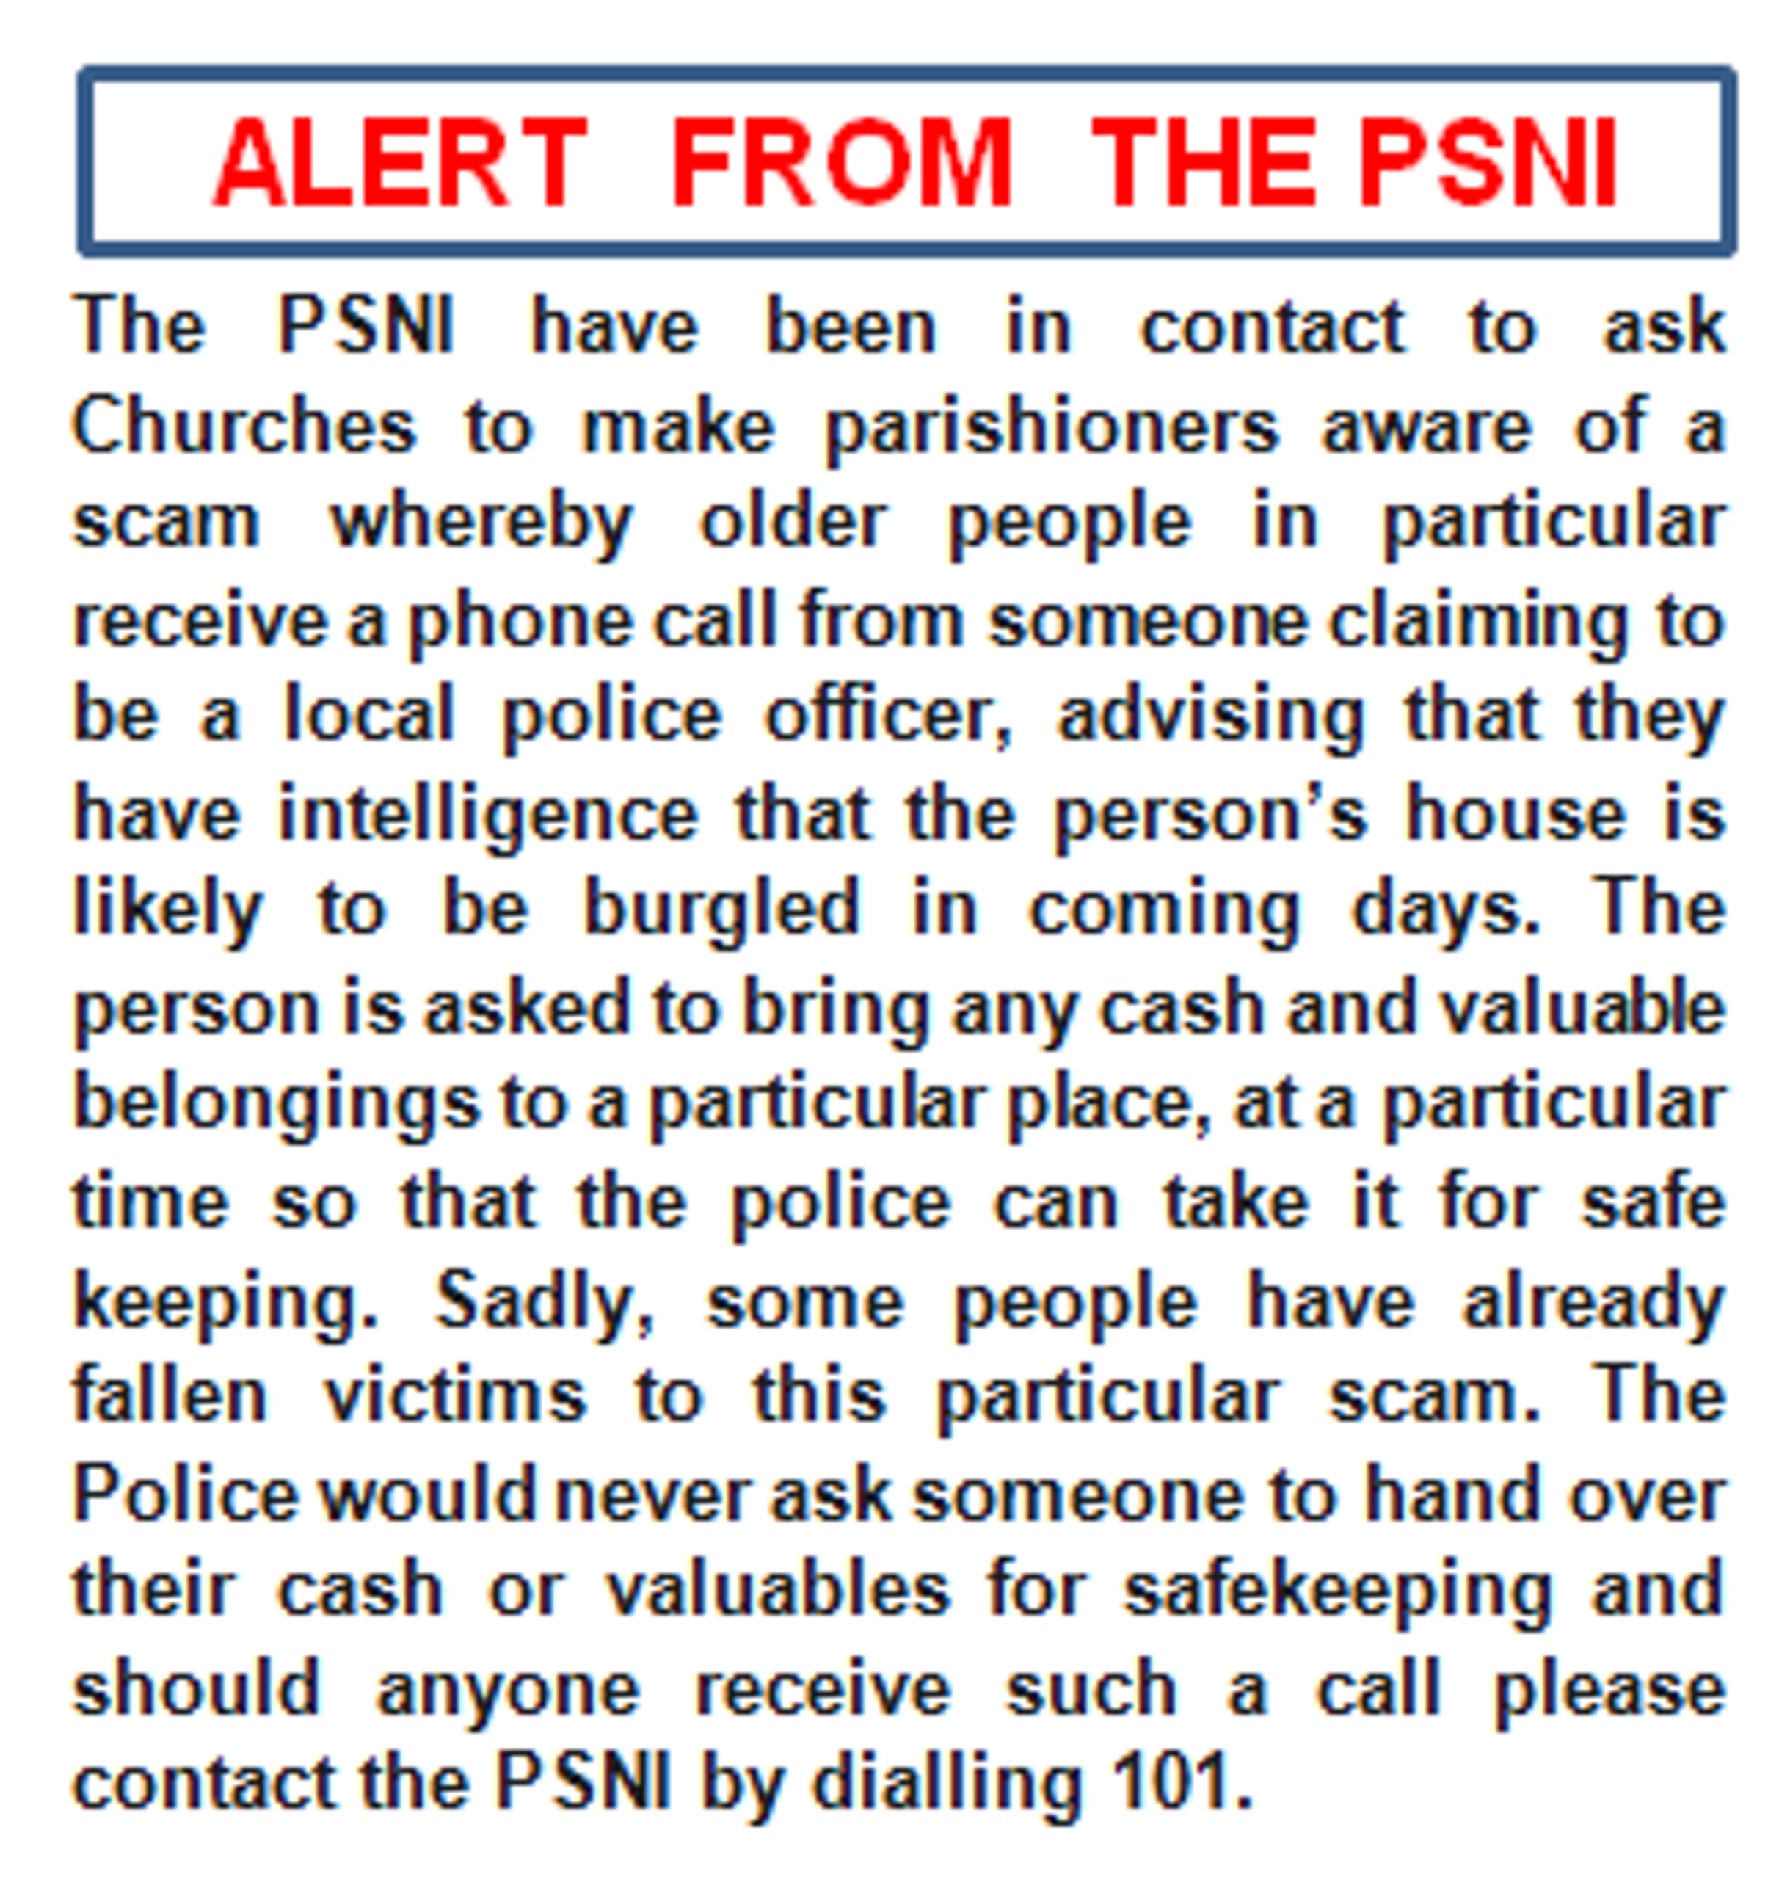 Alert from PSNI 1